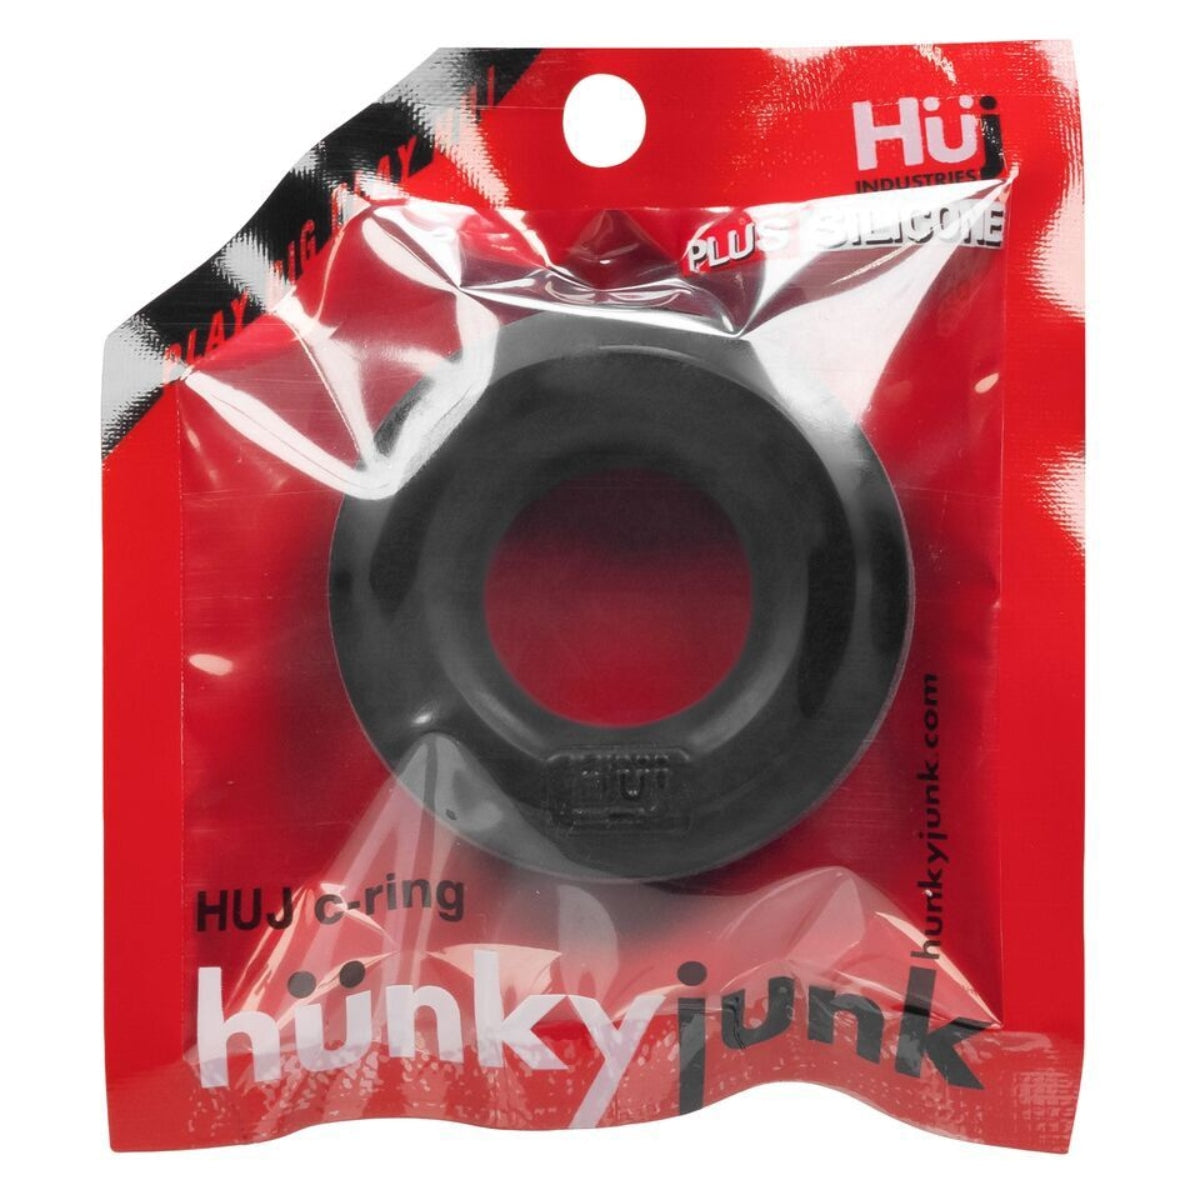 Hunkyjunk HUJ Cock Ring Black